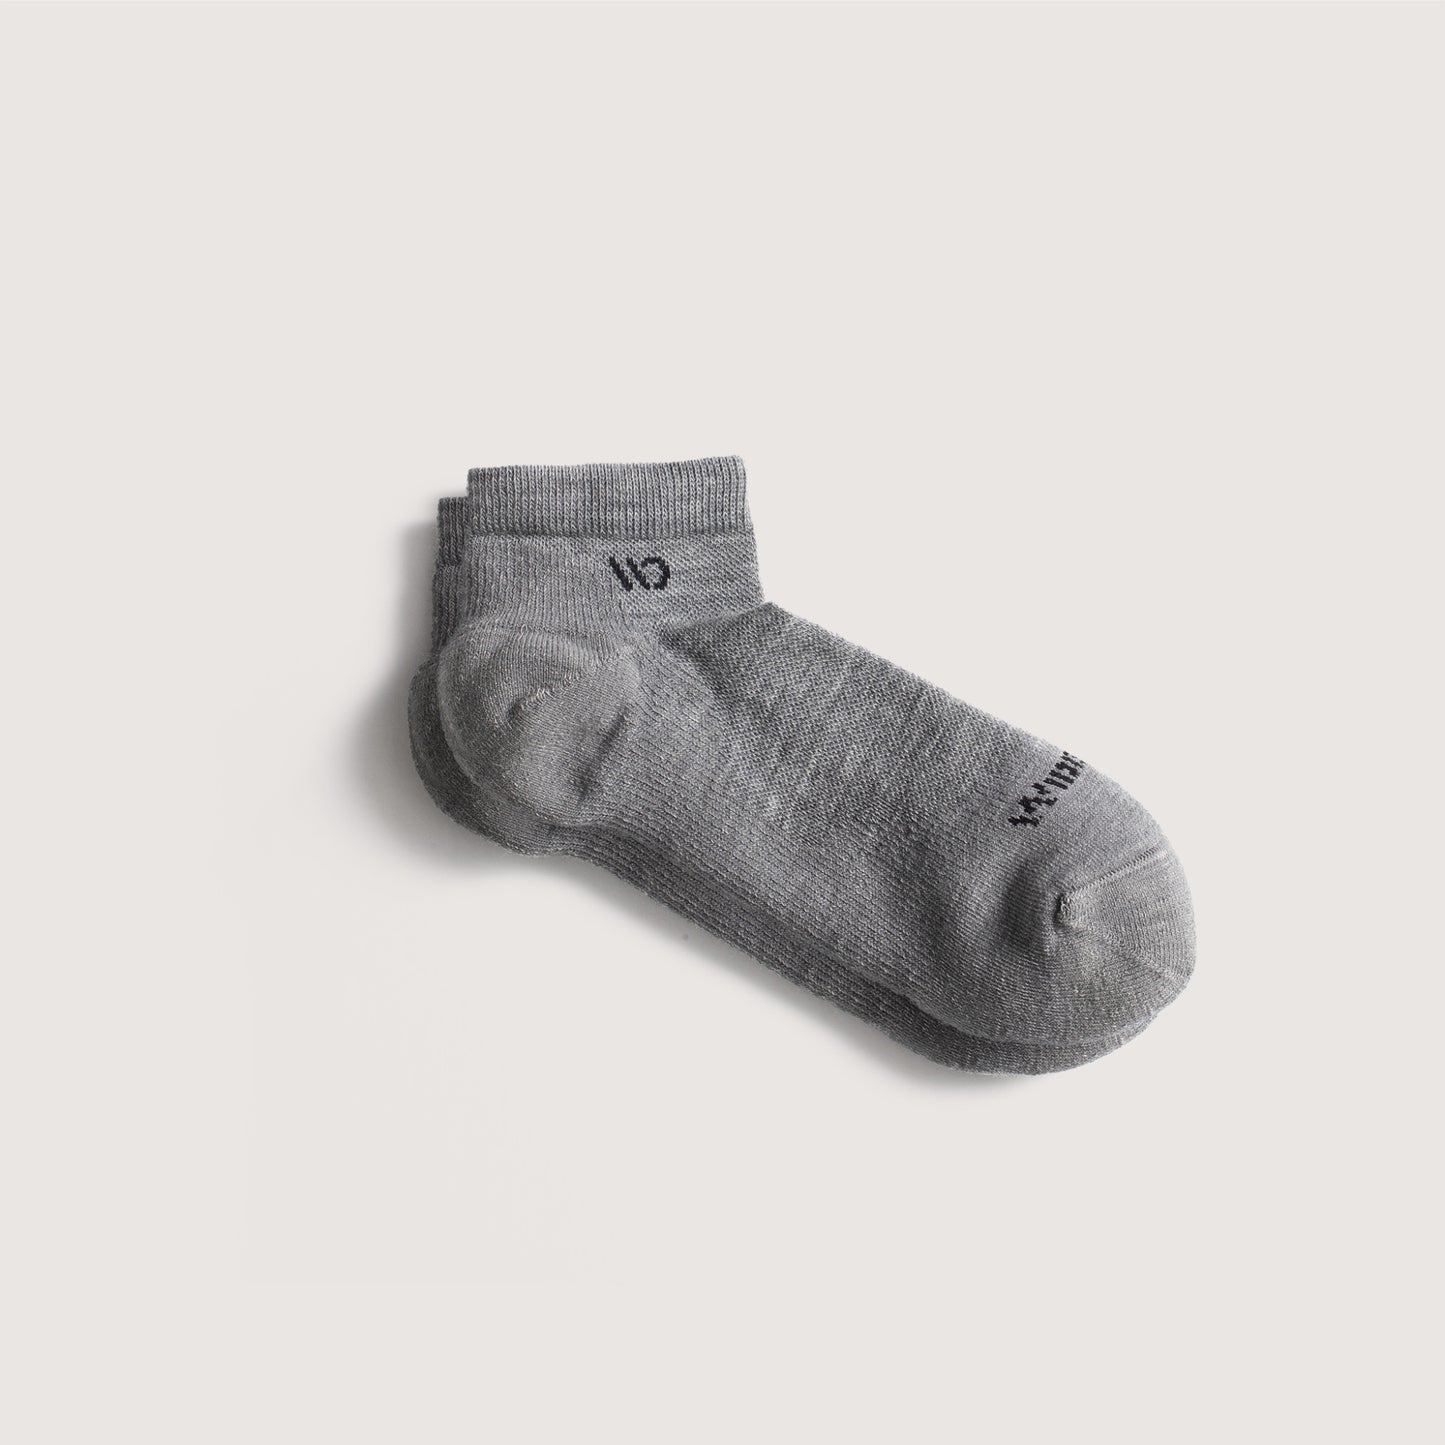 Flat socks, featuring black logo, with light gray body --Light Gray